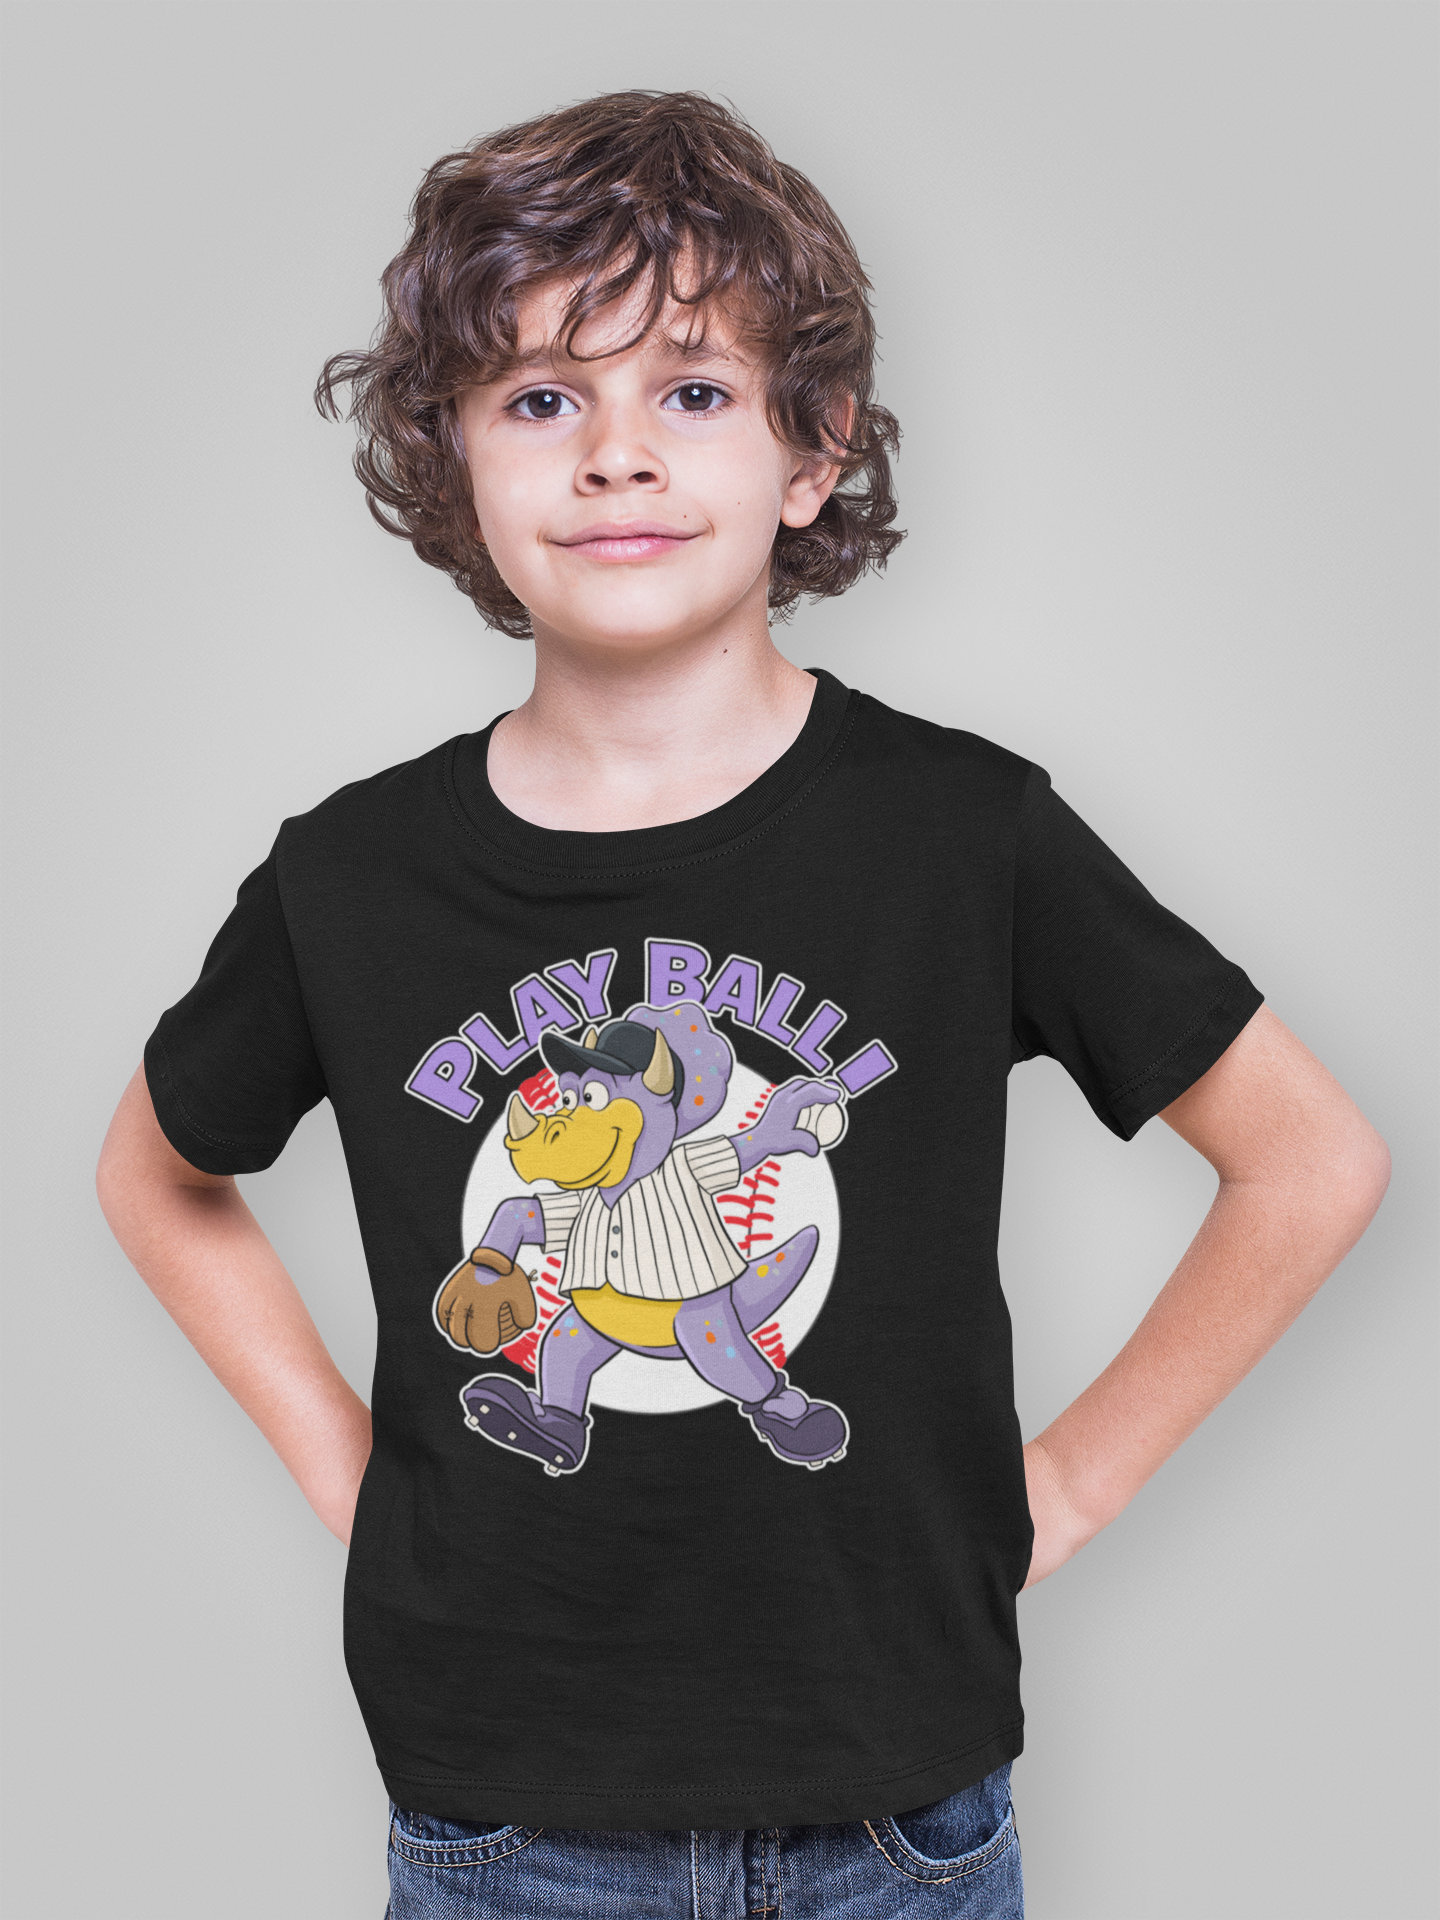 Play Ball Rockies Baseball Mascot Dinger Long Sleeve T-Shirt